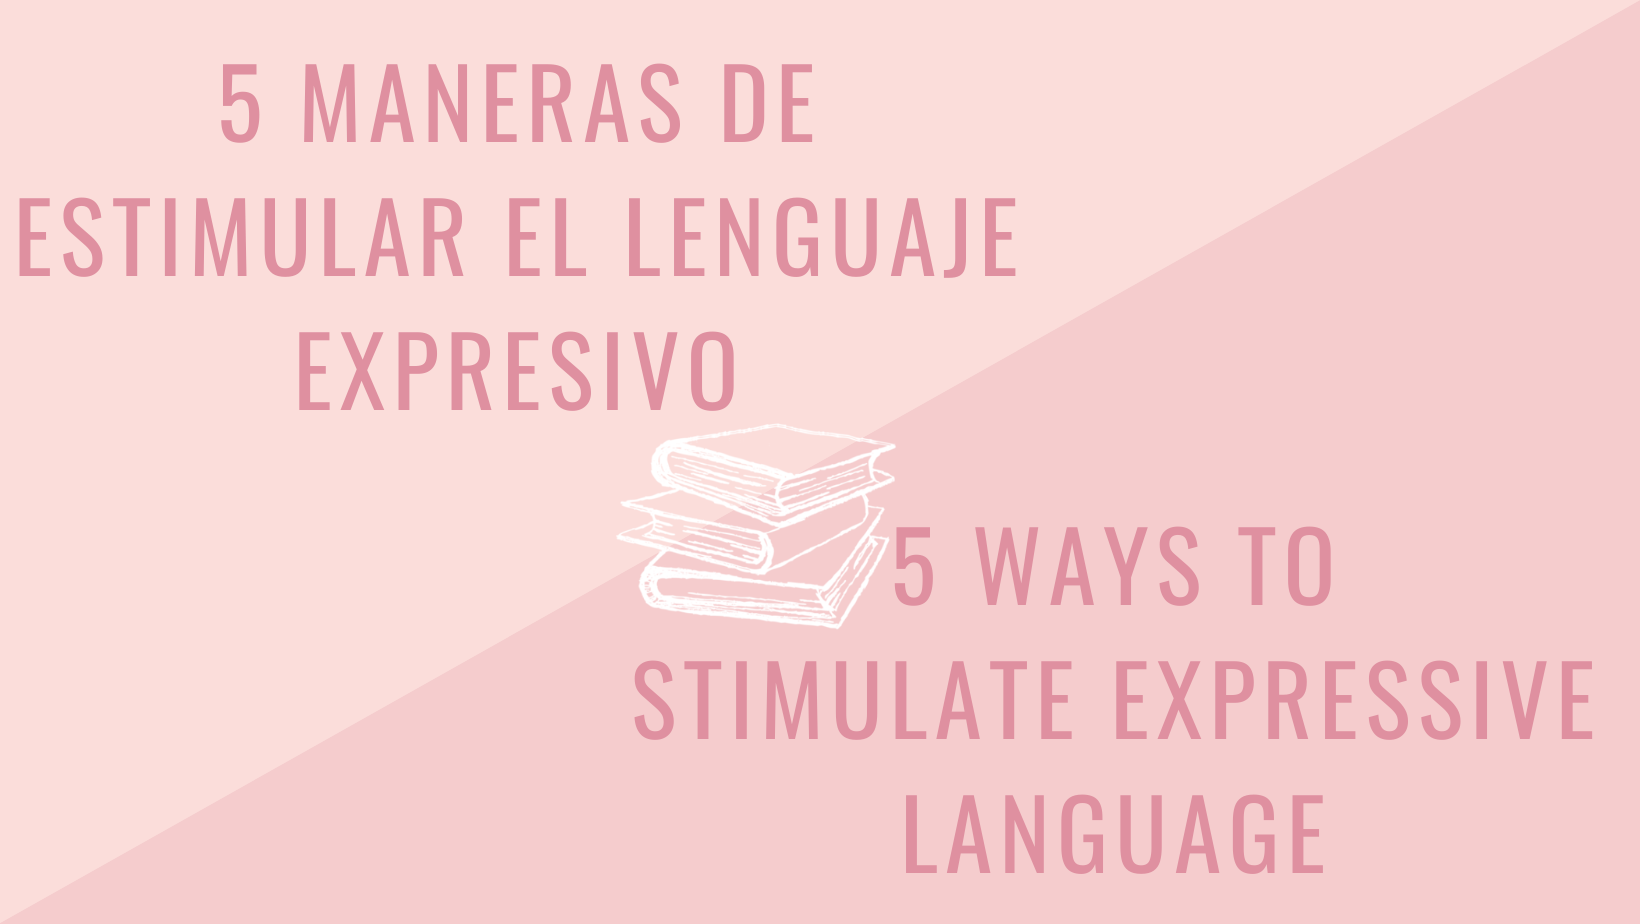 5 Maneras de estimular el lenguaje expresivo.png